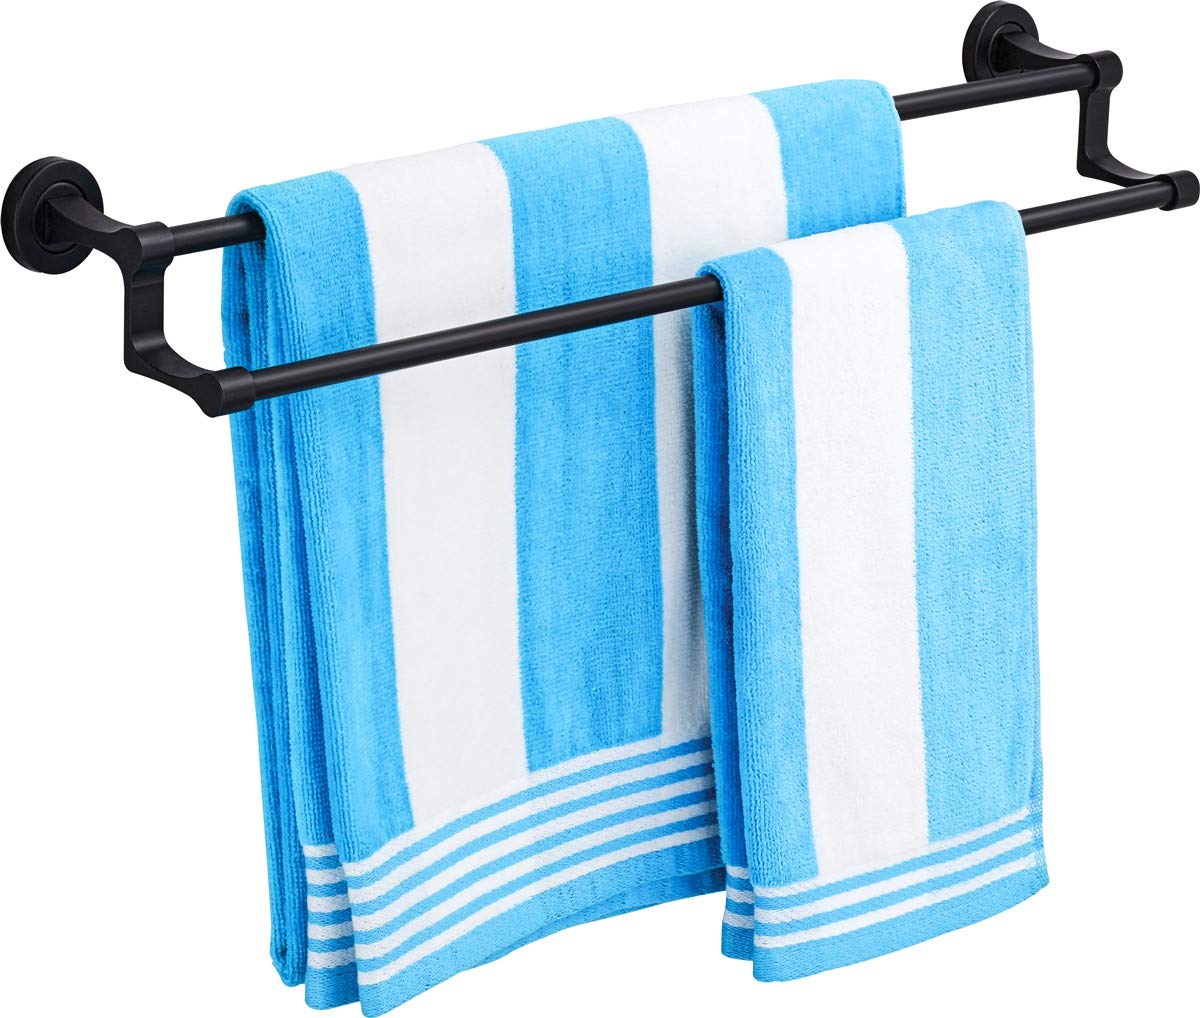 Plantex Premium Stainless Steel & Aluminum Towel Rod/Towel Hanger for Bathroom/Towel Rod/Stand/Bathroom Accessories (24 Inch-Black)